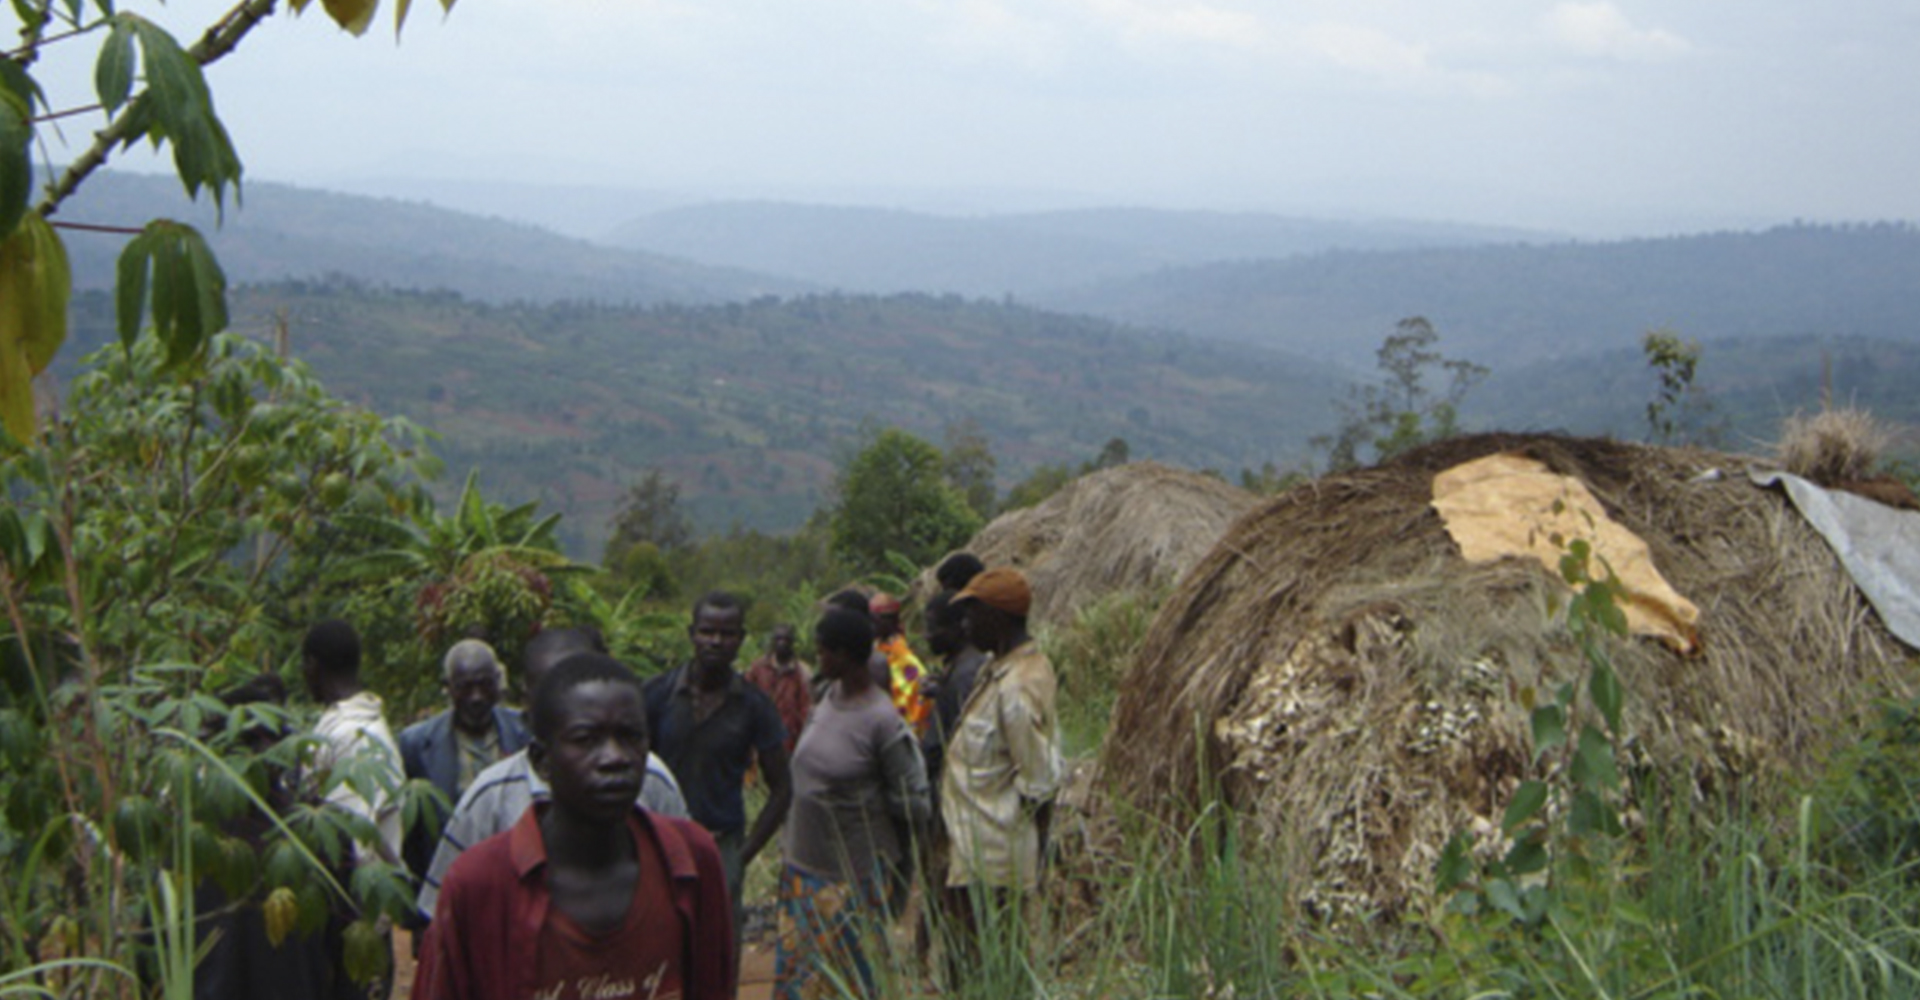 Indigenous peoples in Burundi